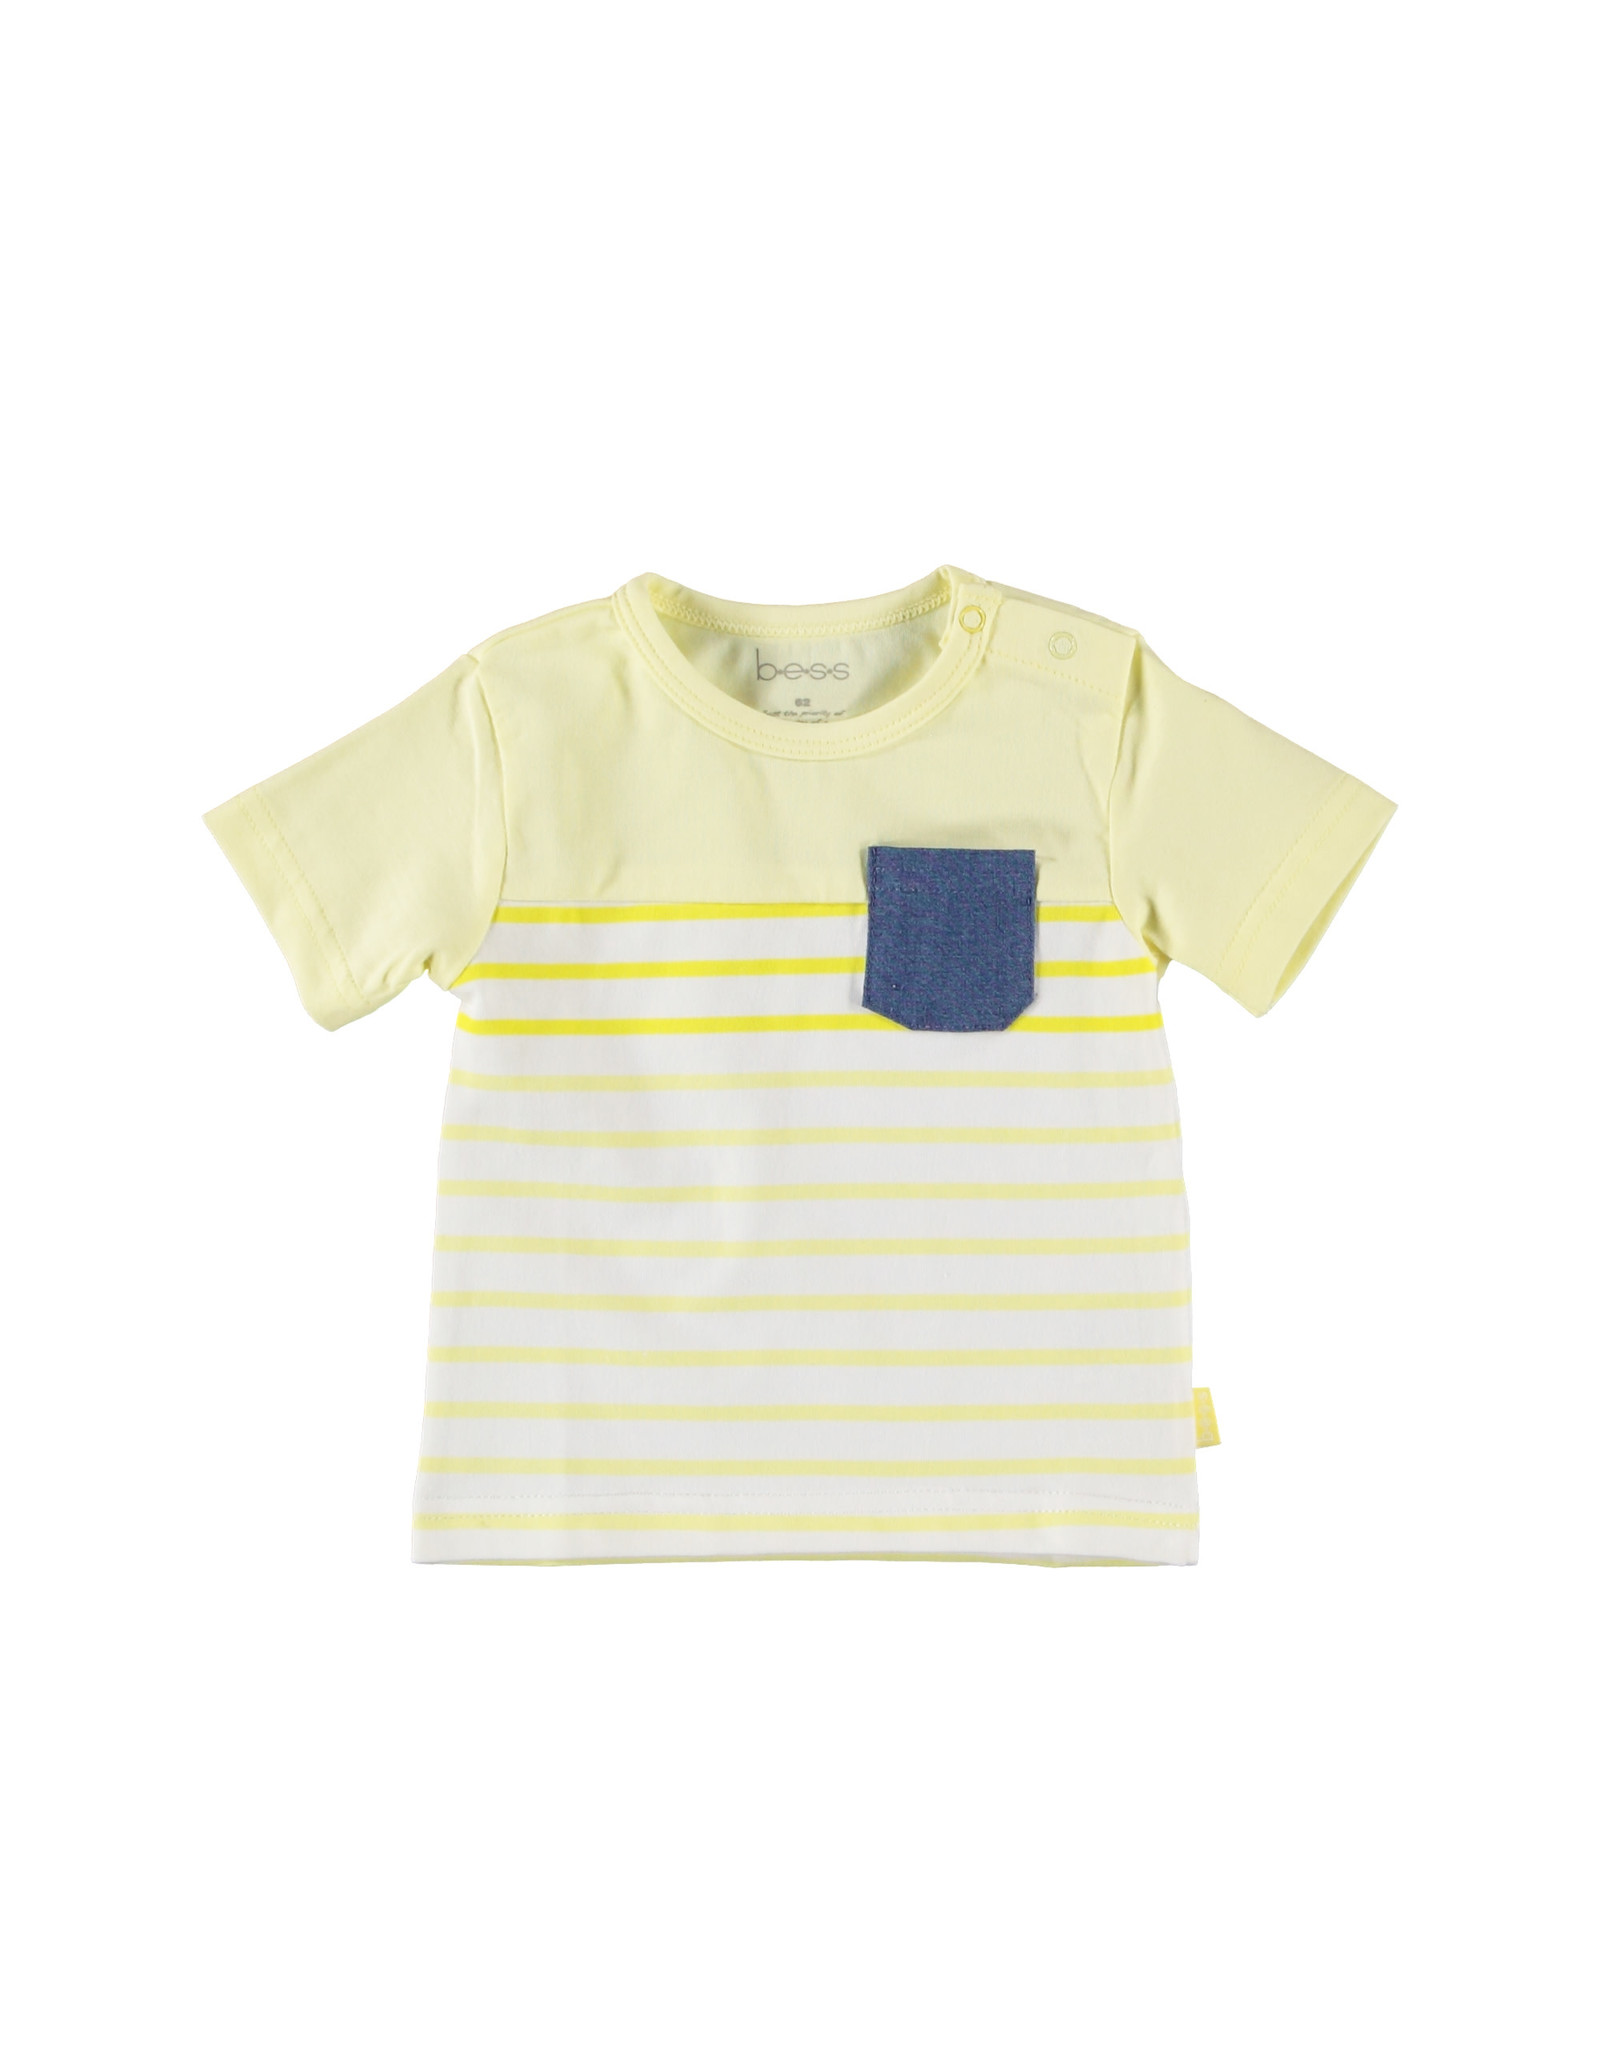 BESS Shirt sh.sl. Striped with Pocket Yellow